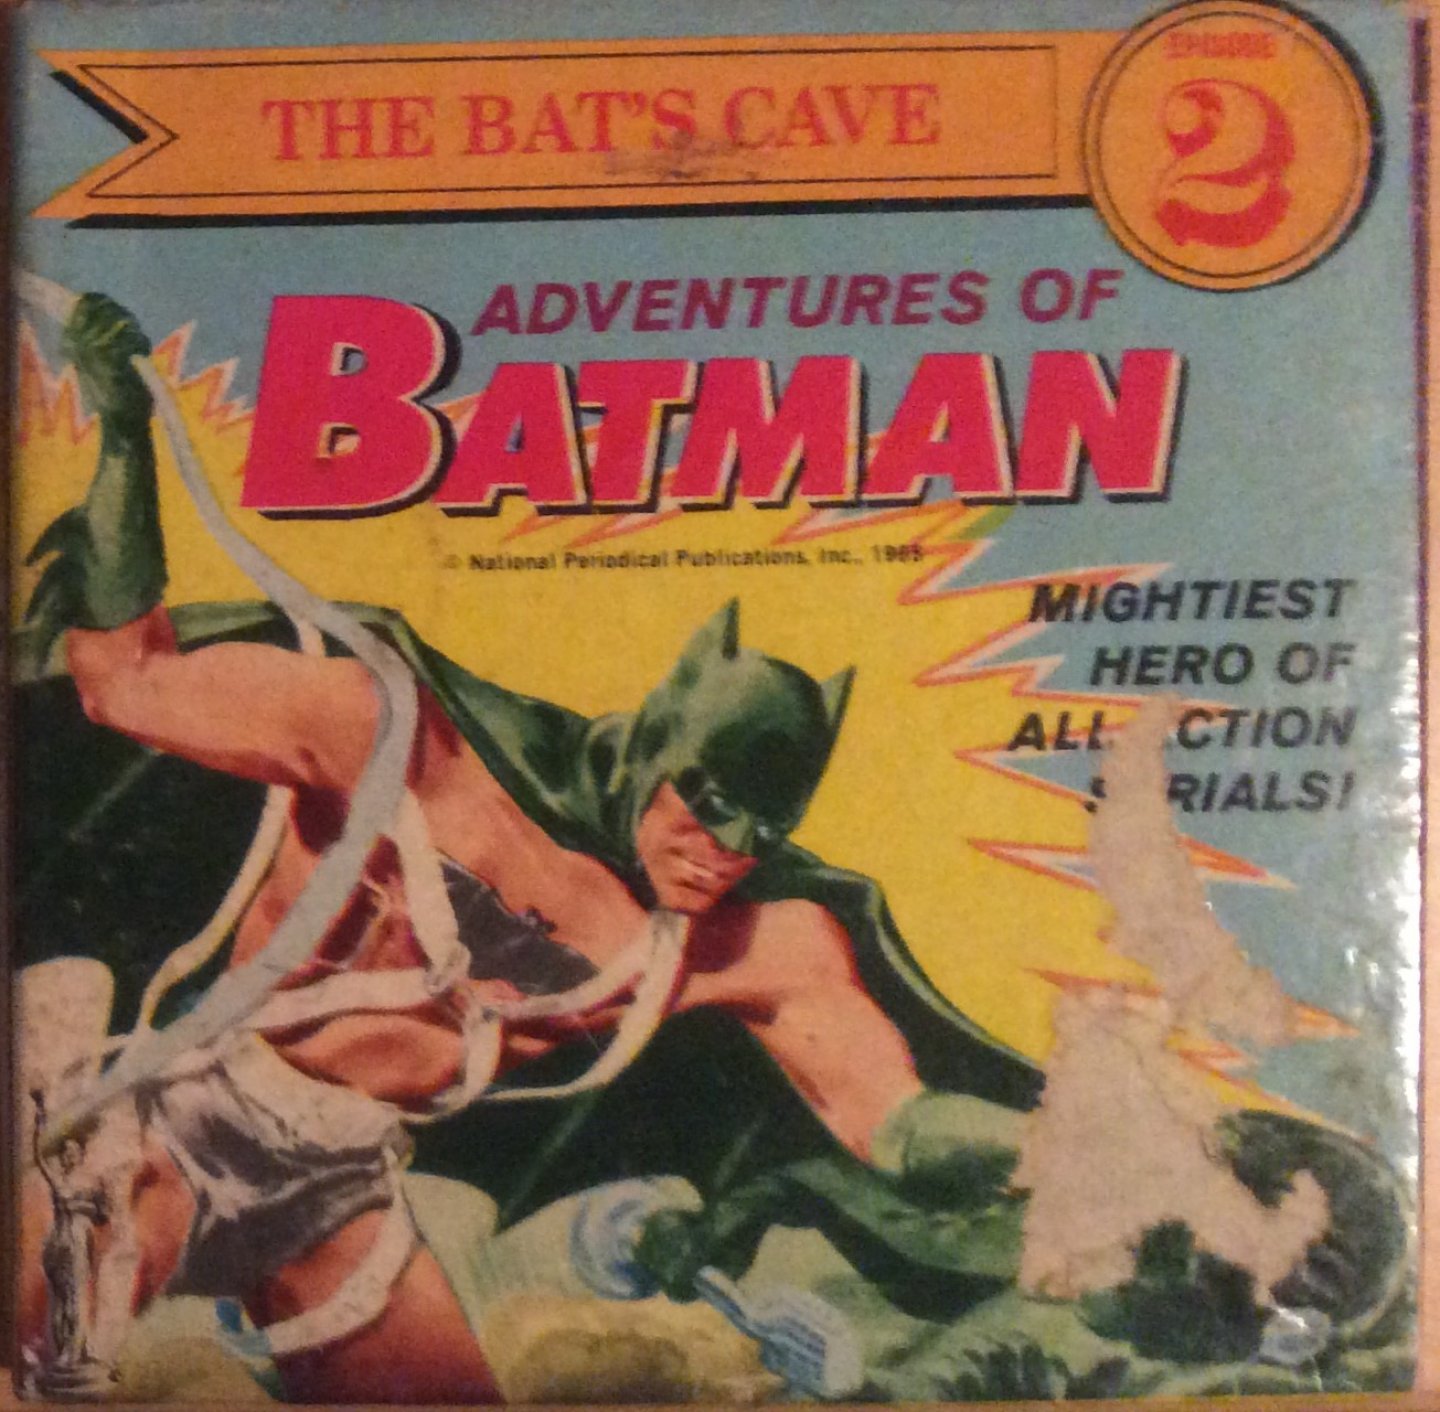 National Periodical Punlications Inc. - Adventures of Batman. The Bat's Cave episode 2